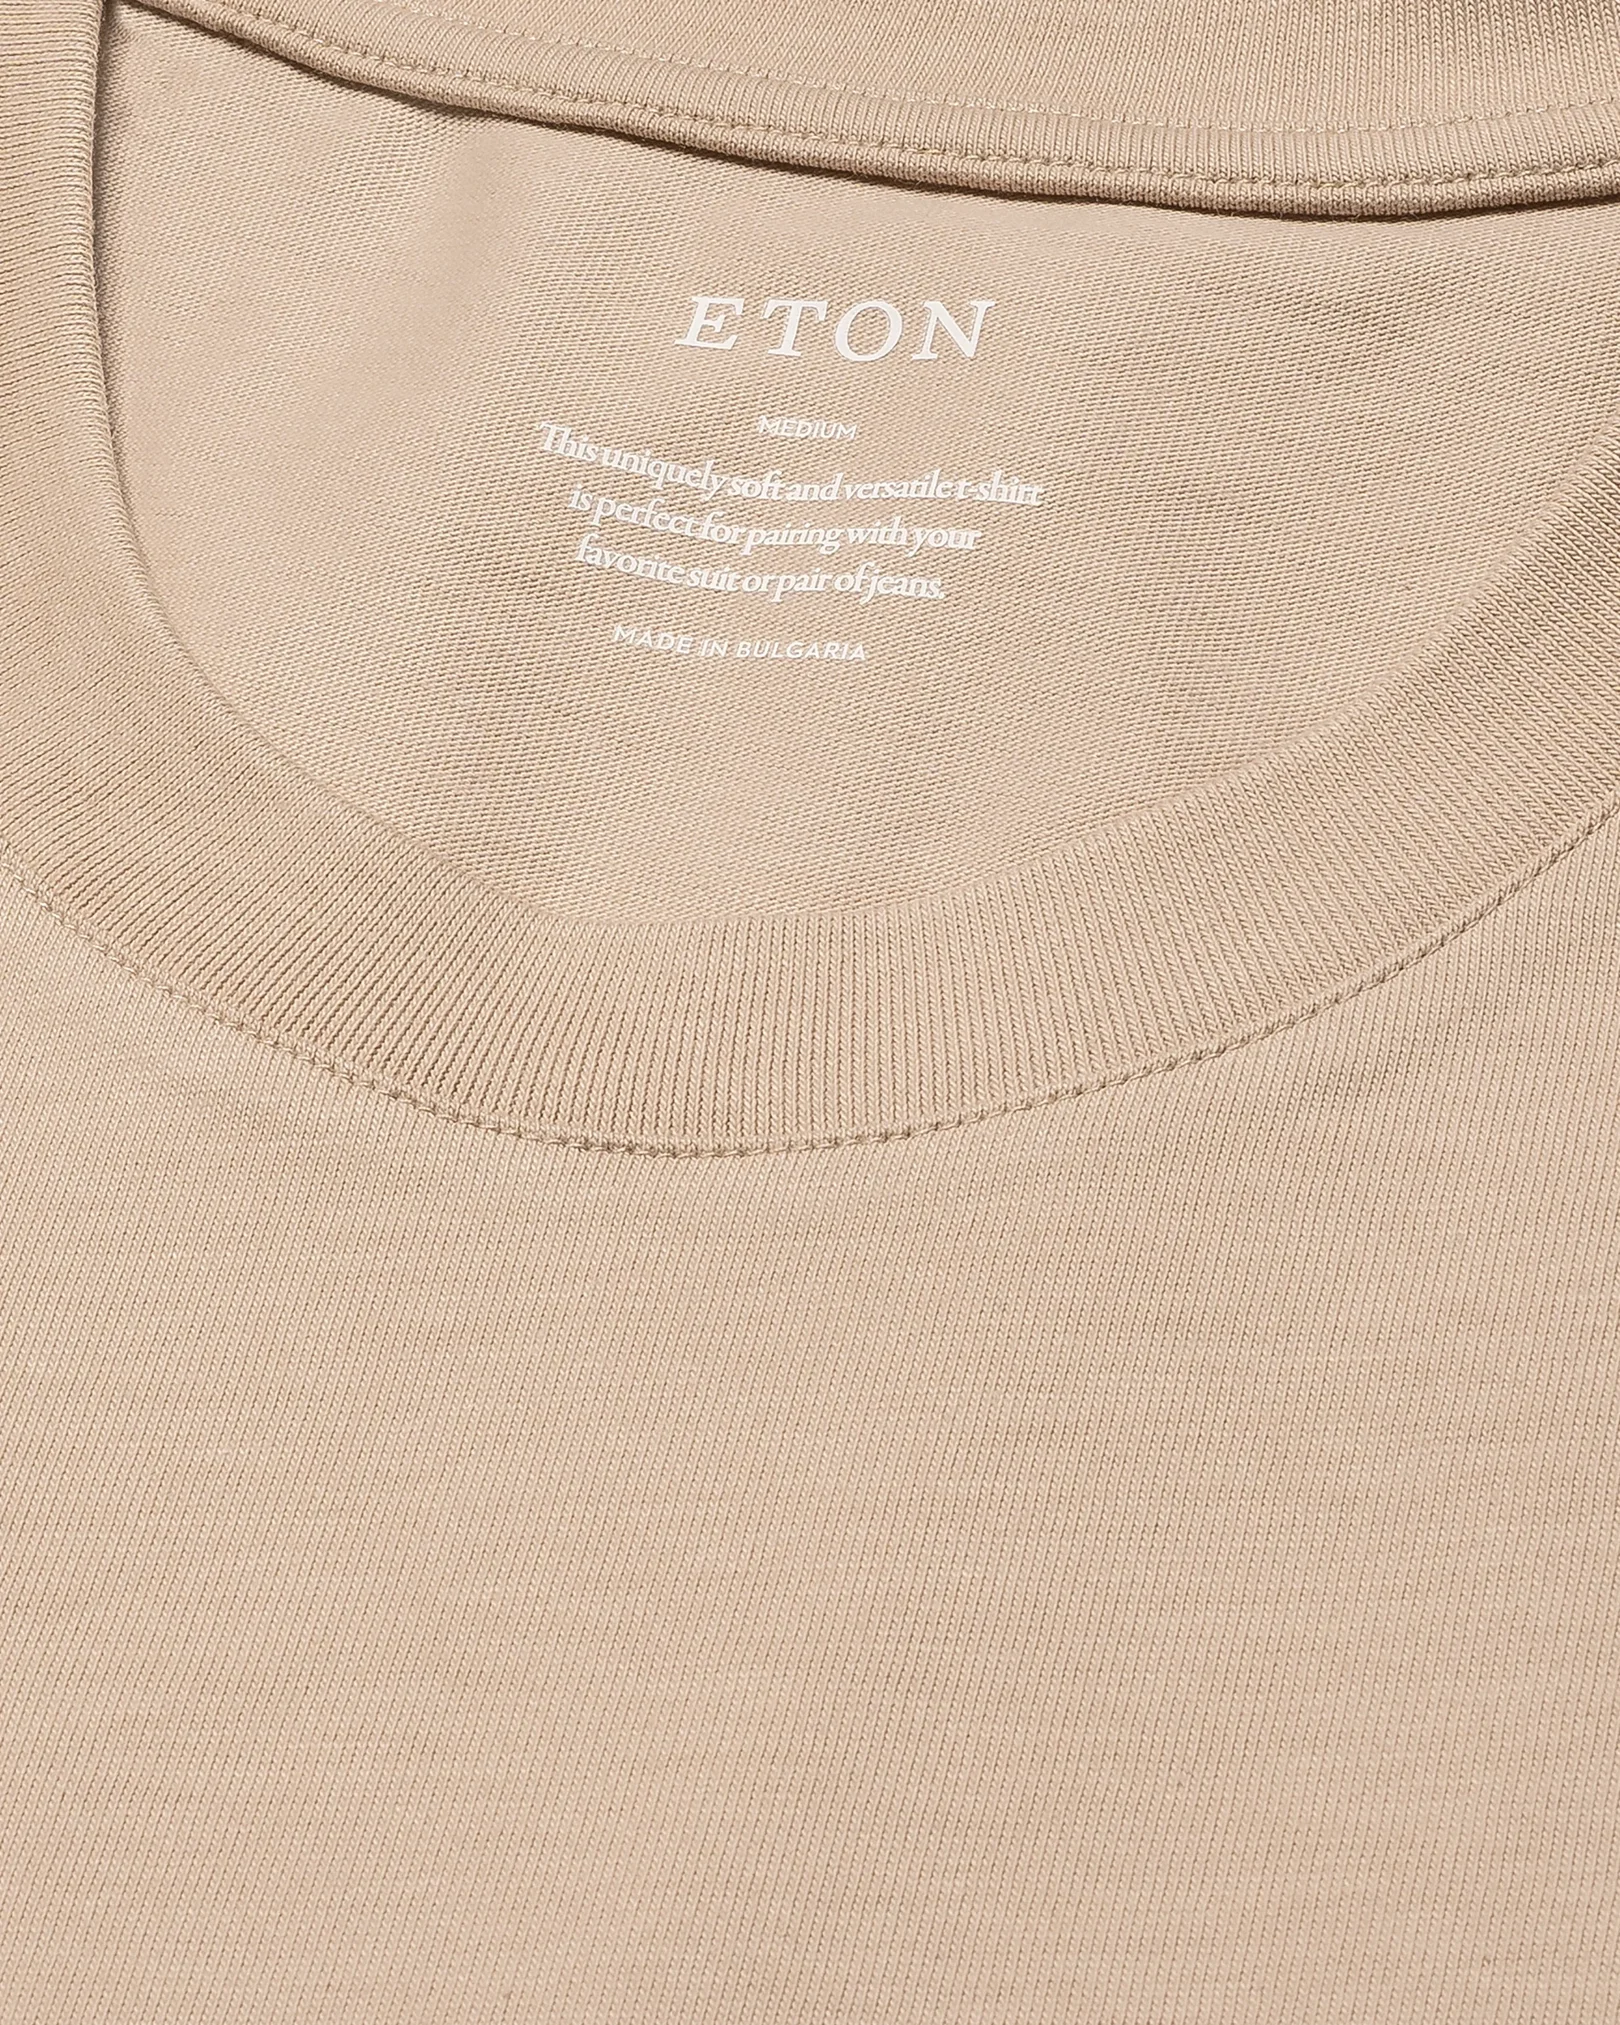 Mens Luxury T Shirts - Quality since 1928 - Eton